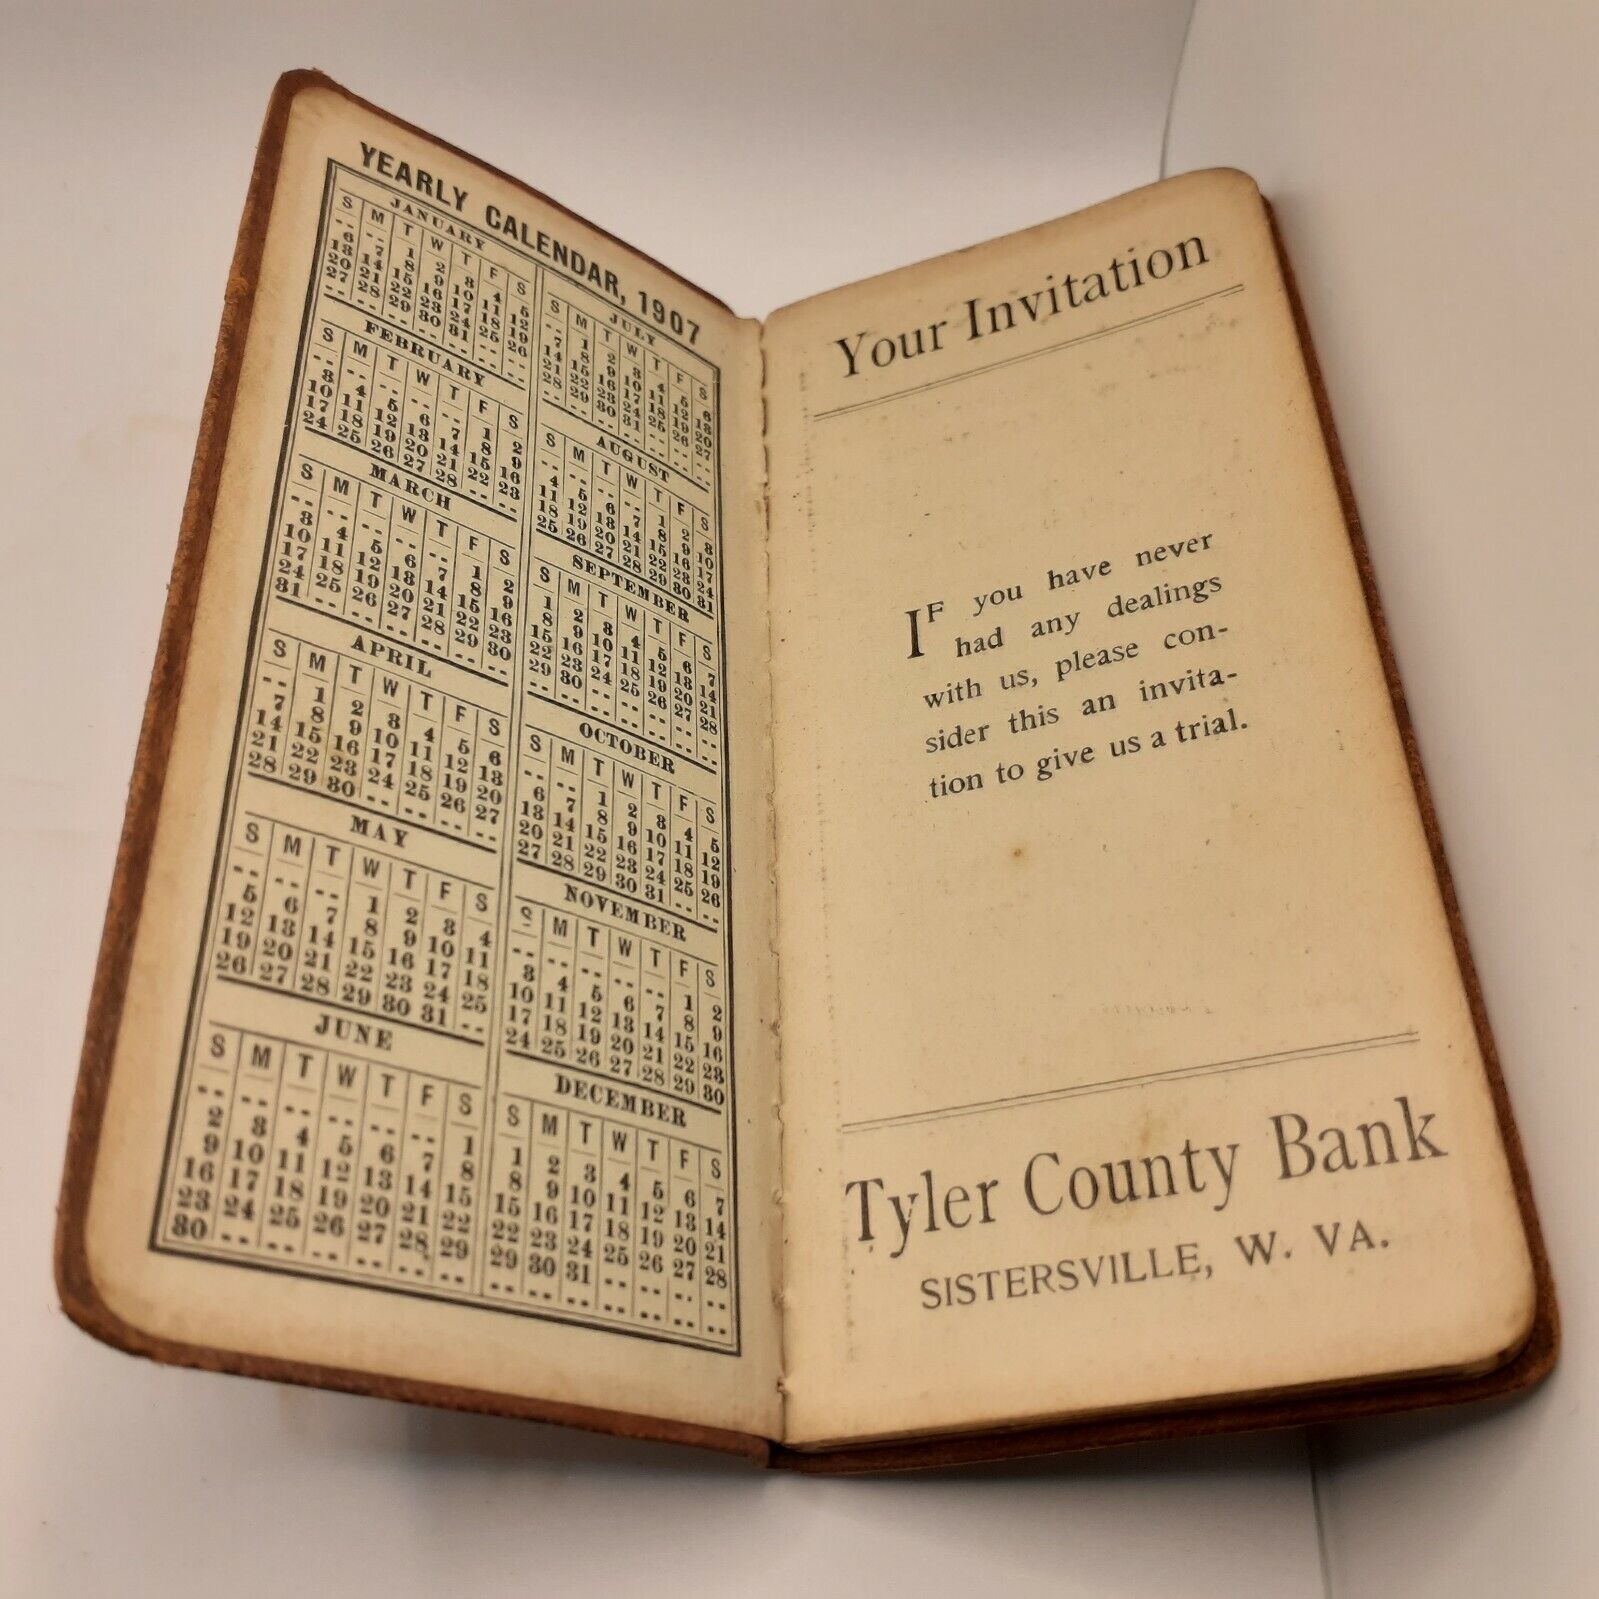 1907 Tyler County Bank Daily Calendar, Sisterville, West Virginia